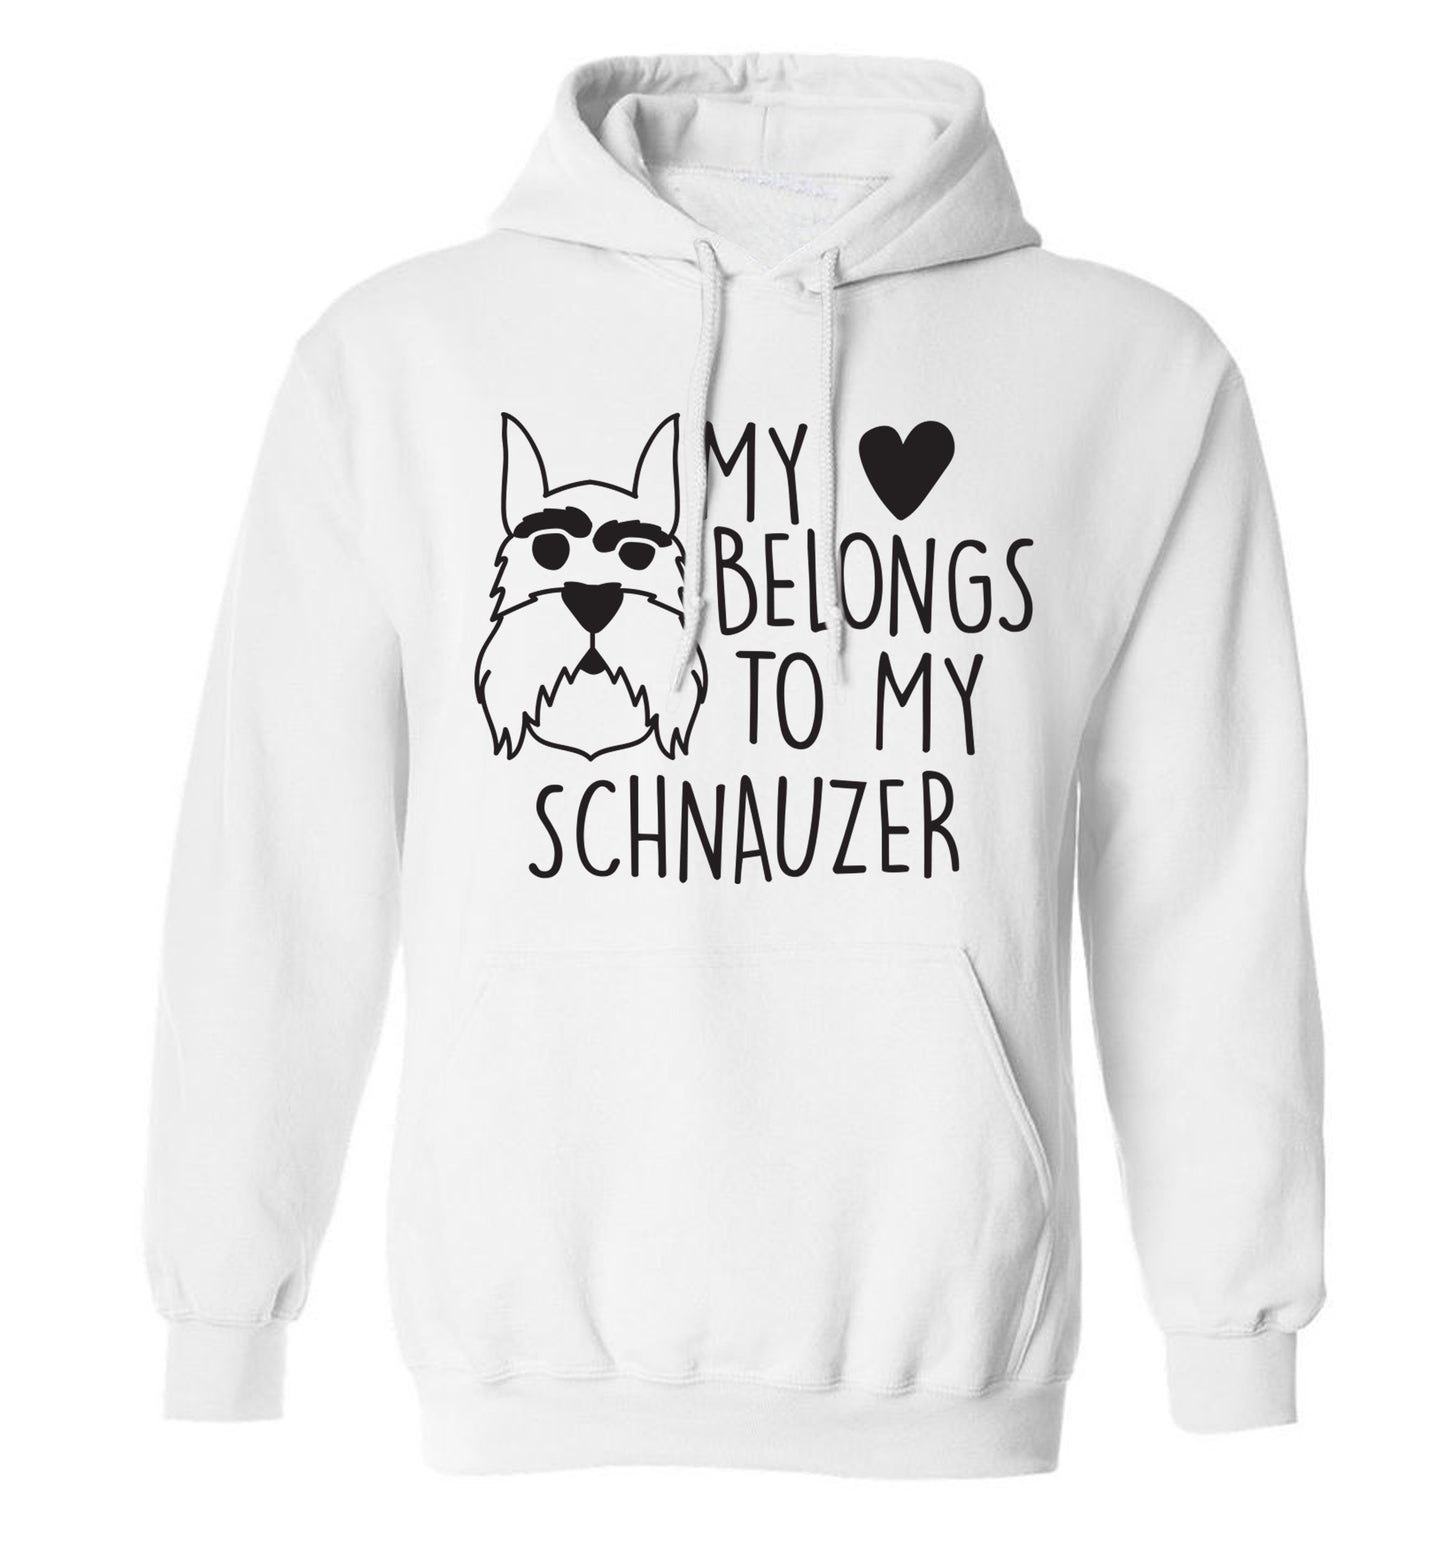 My heart belongs to my schnauzer adults unisex white hoodie 2XL